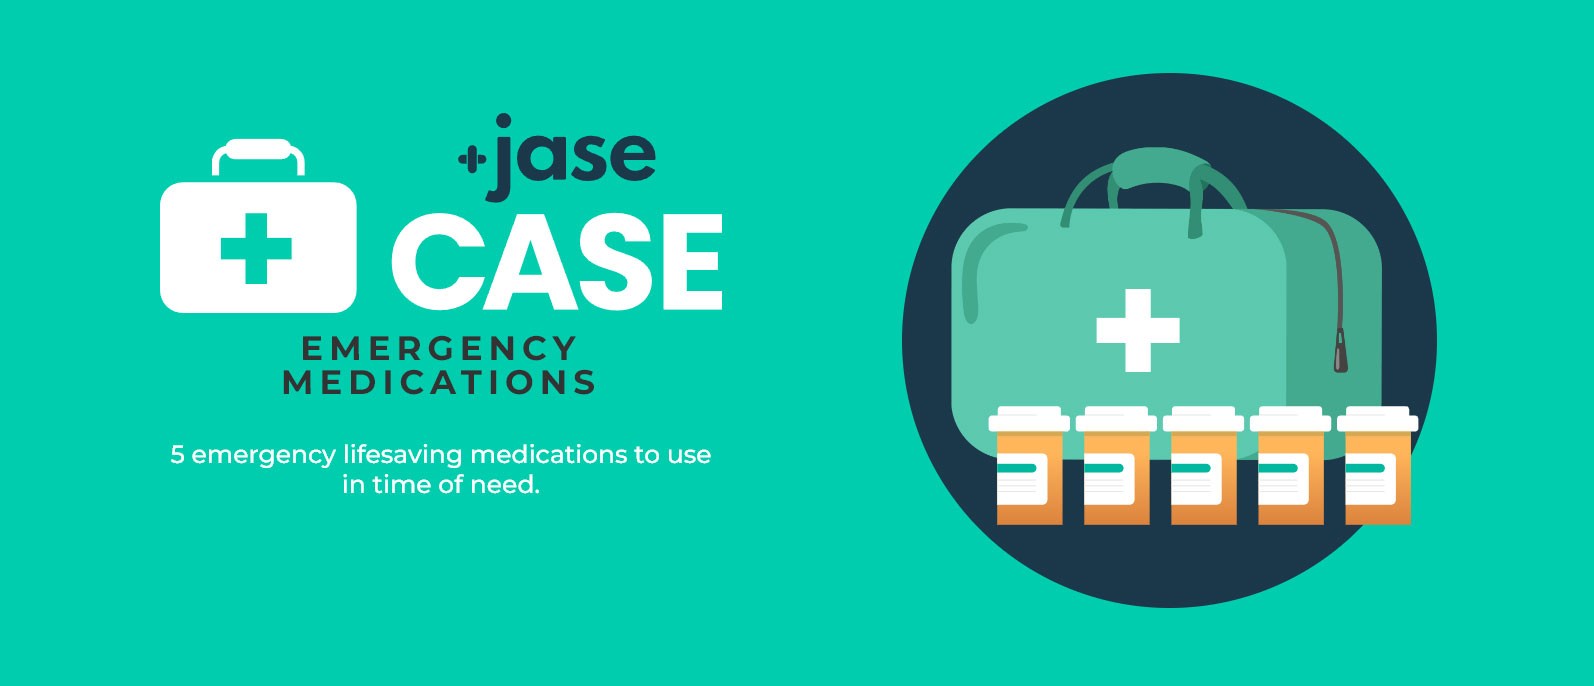 Jase Case Emergency Medications